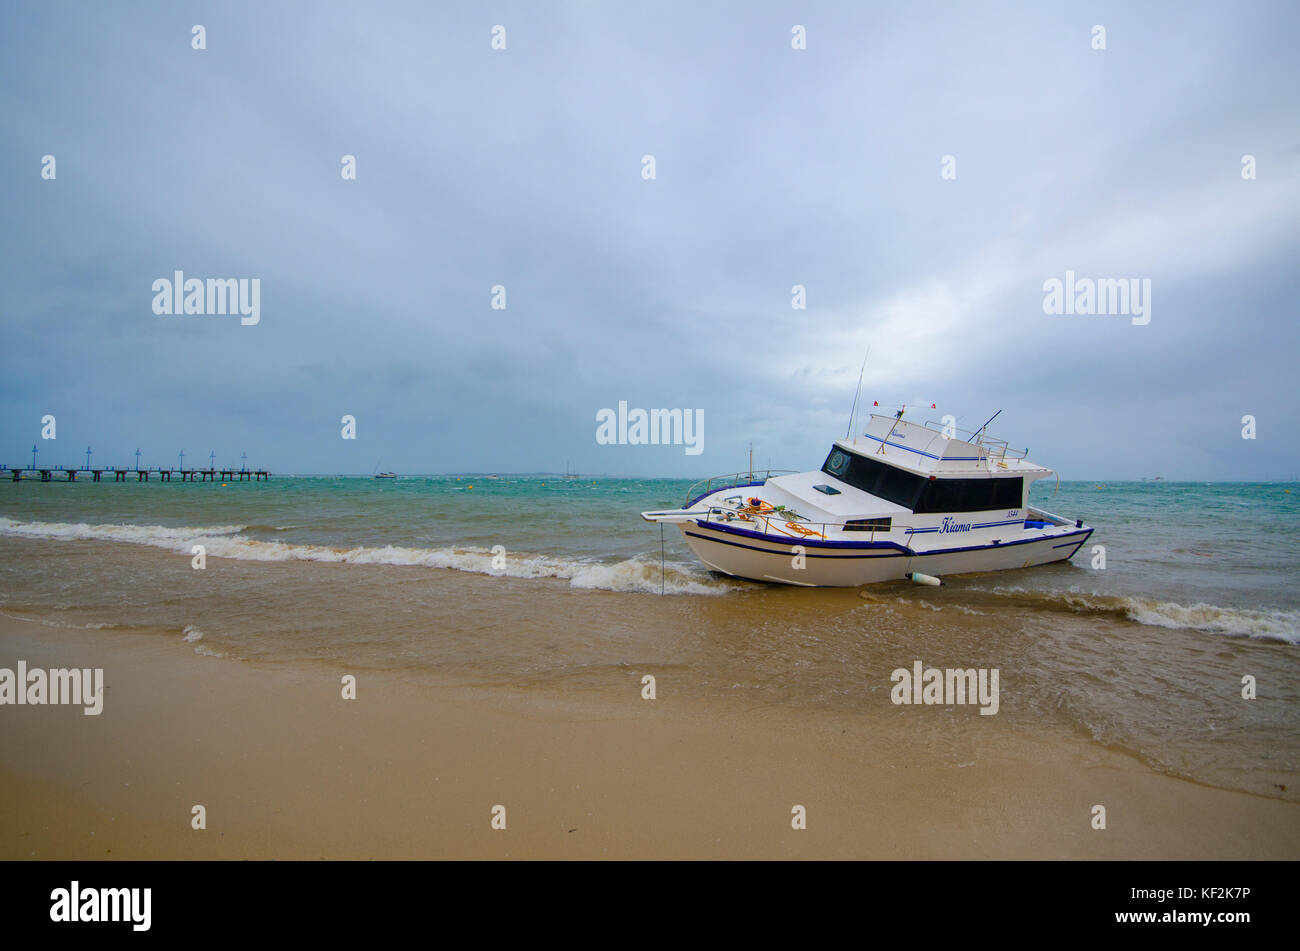 Boat aground on beach after severe storm, Rockingham, Western Australia Stock Photo